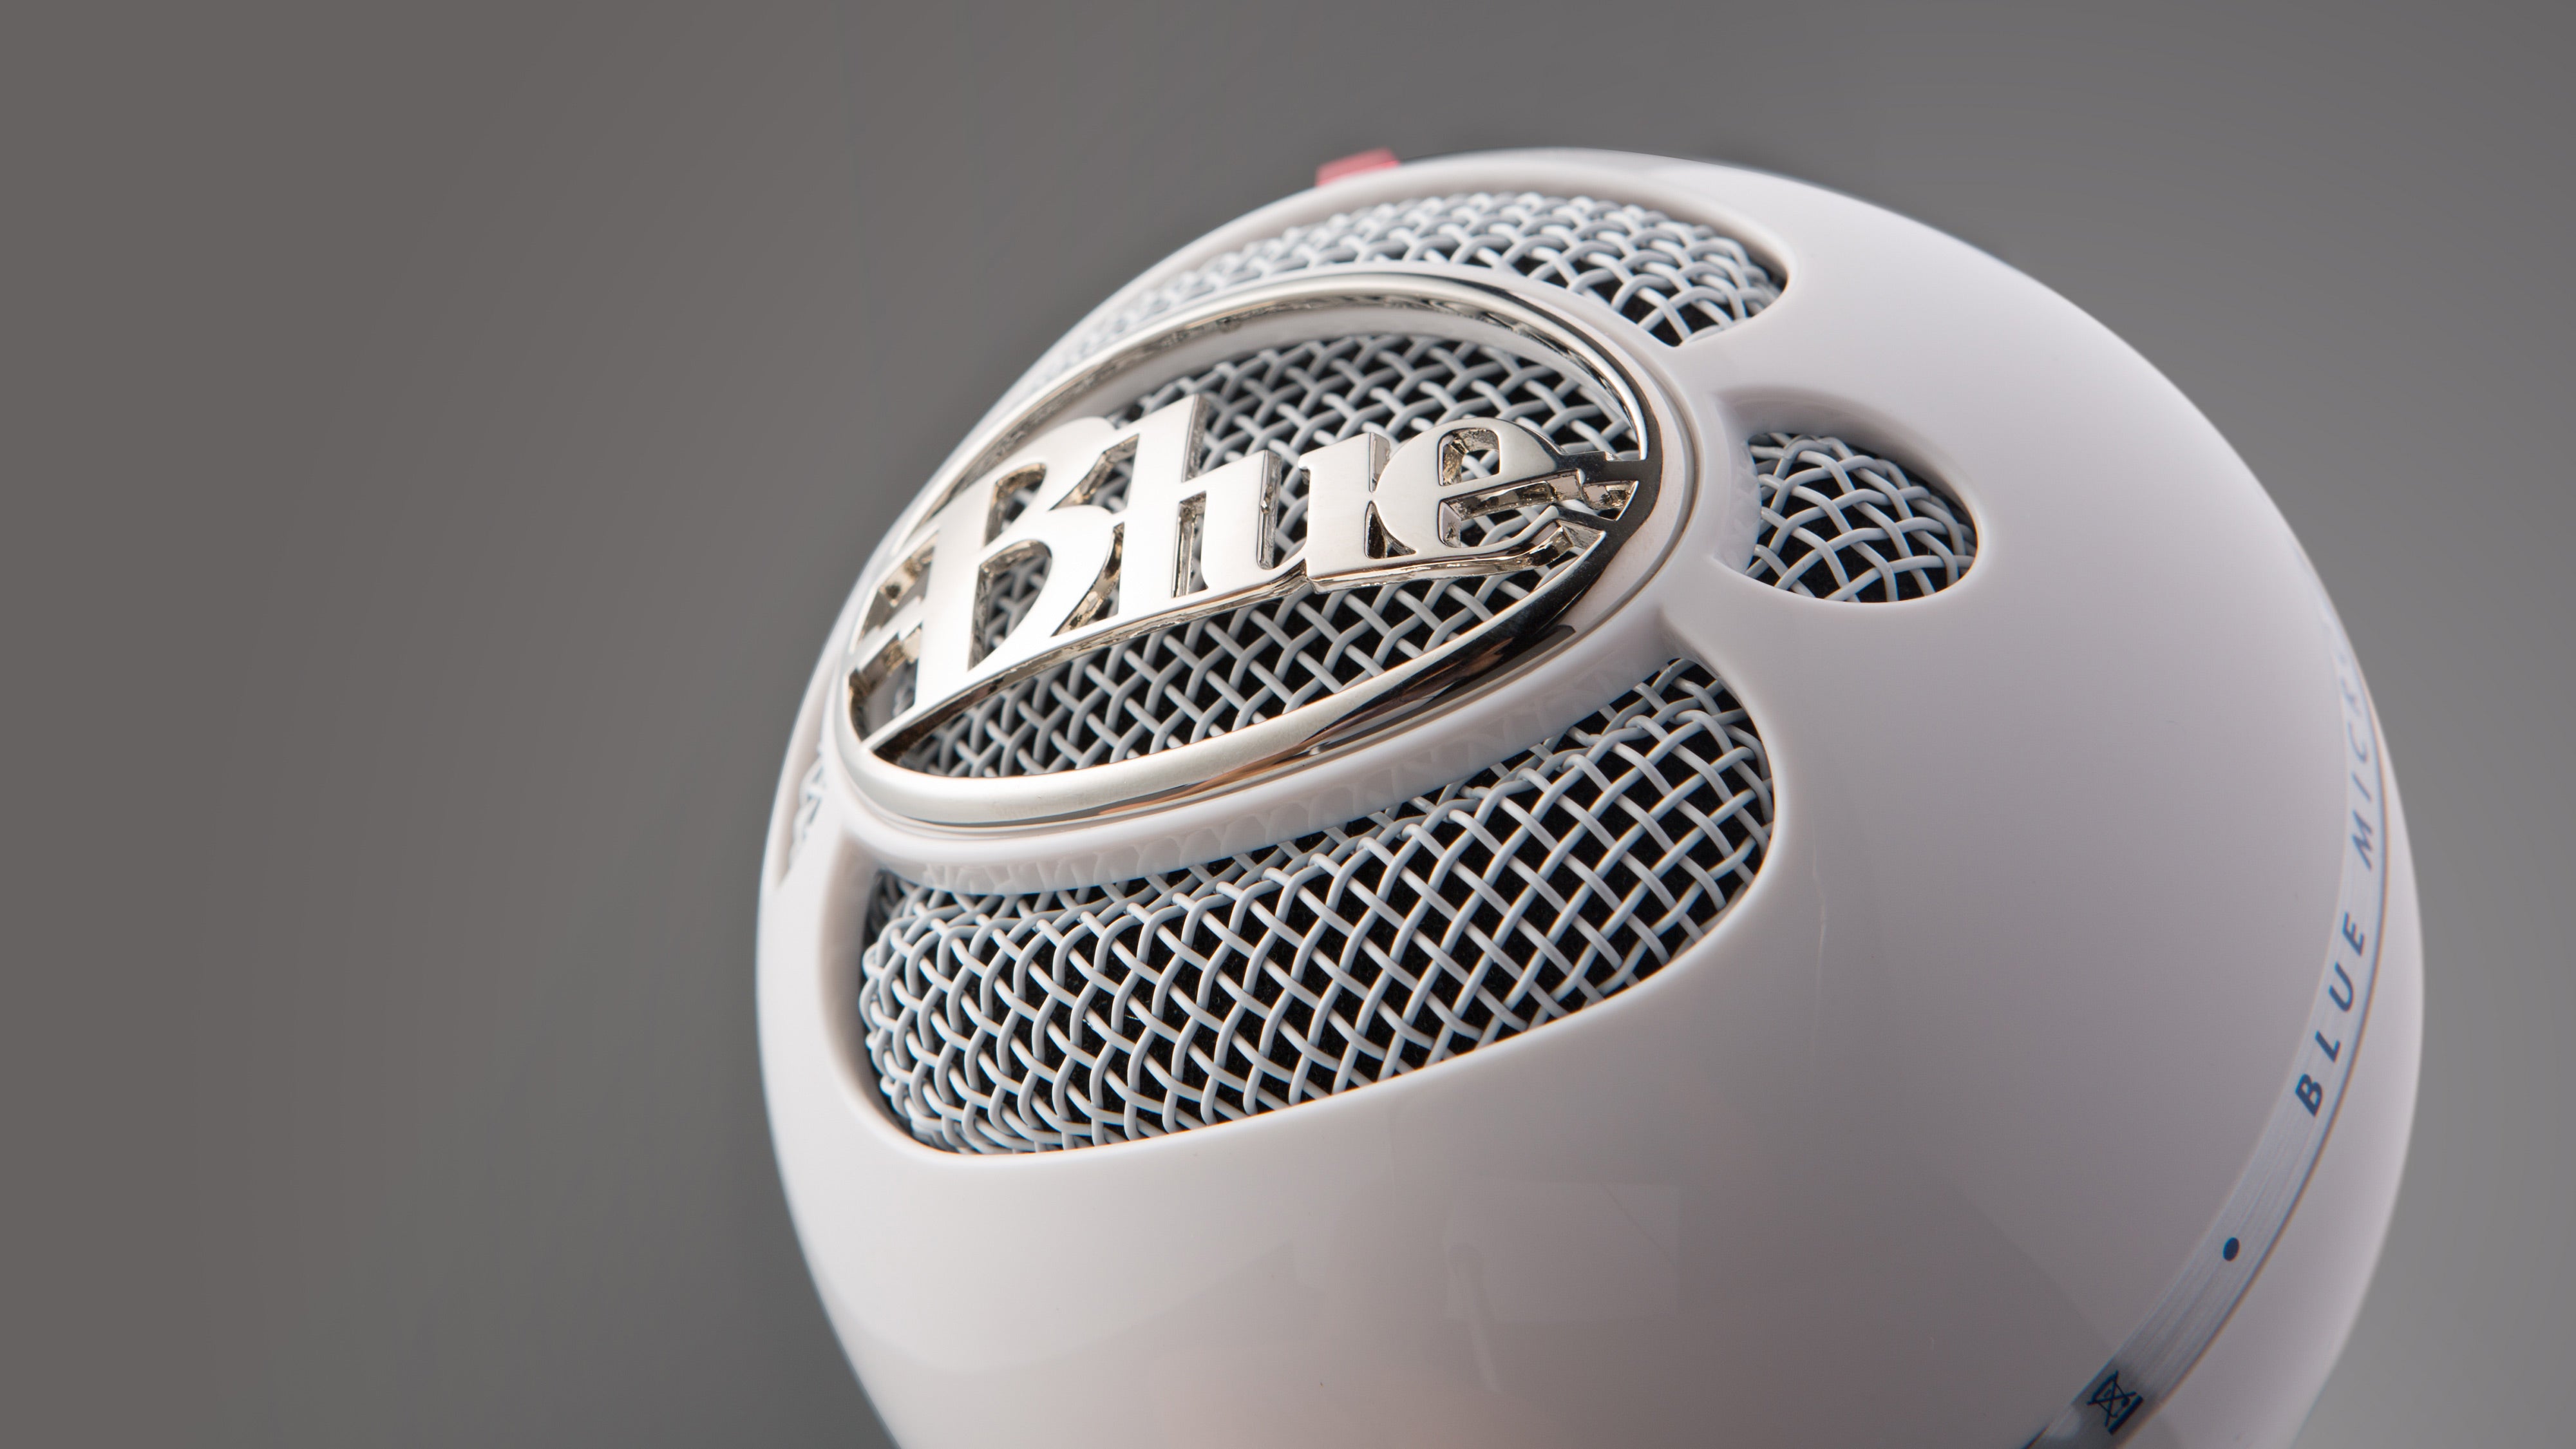 Blue Snowball iCE Plug & Play USB Microphone - Golchha Computers